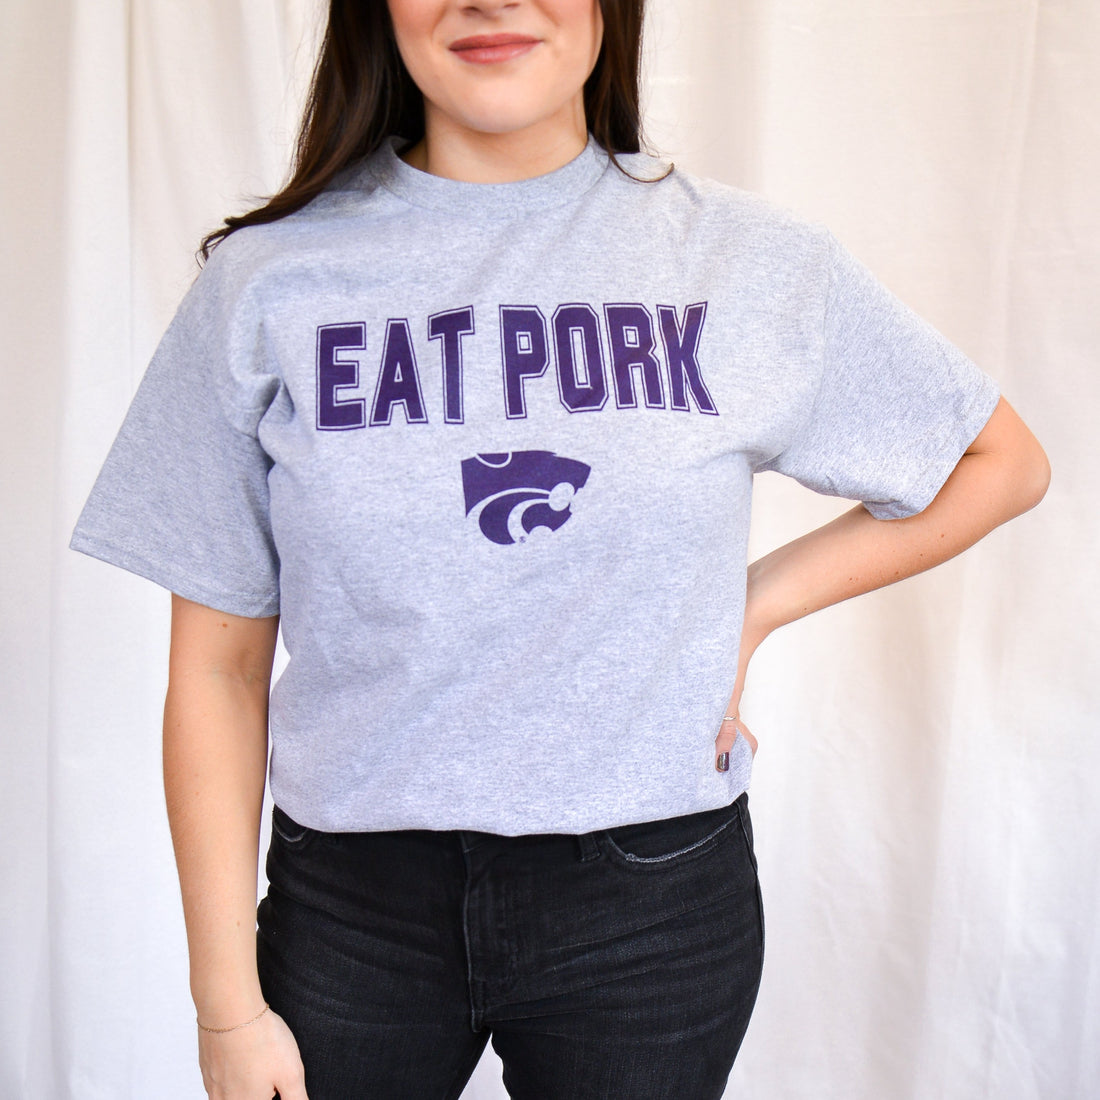 Eat Pork T-Shirt - ADULT UNISEX - Grey